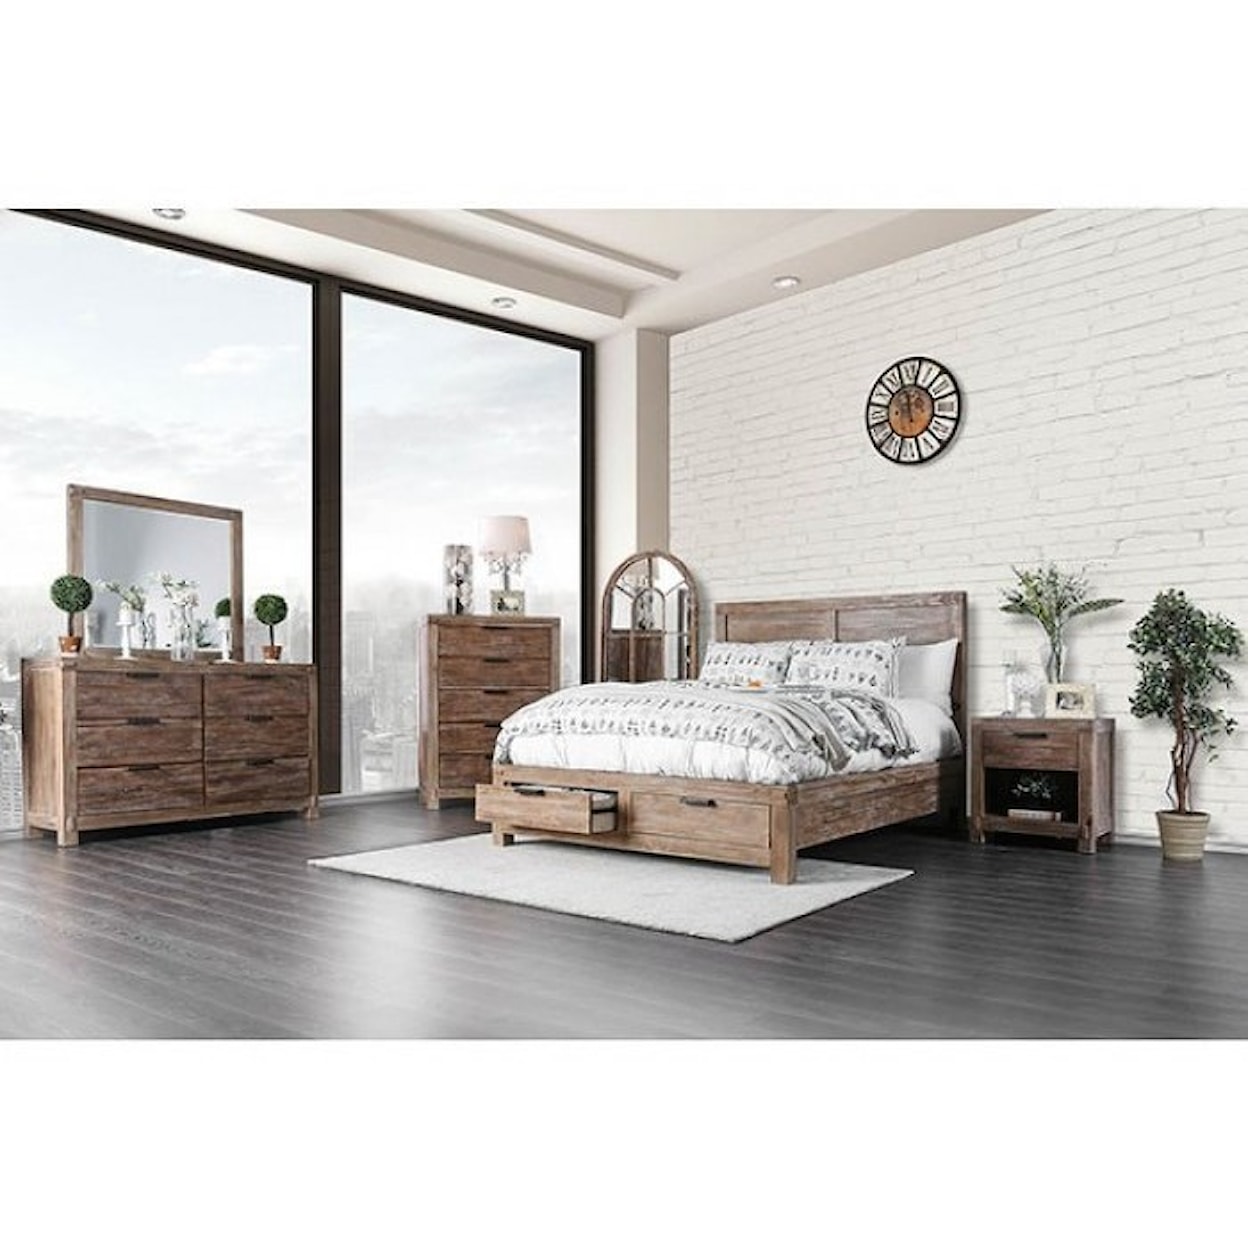 Furniture of America Wynton California King Bedroom Group